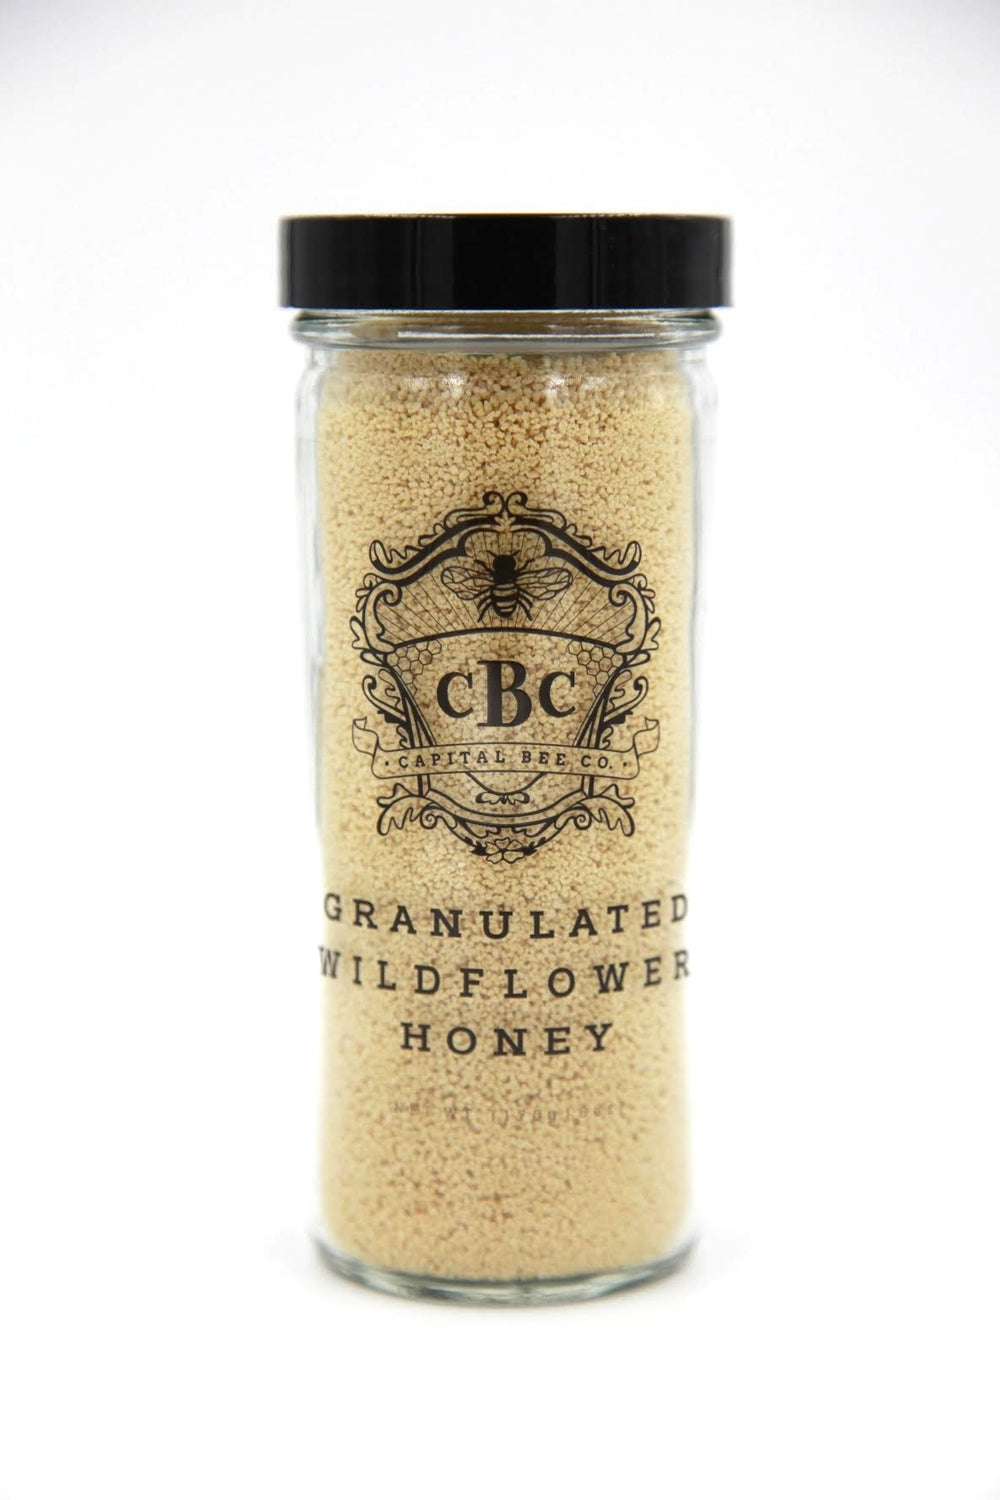 Granulated Wildflower Honey - Capital Bee Company